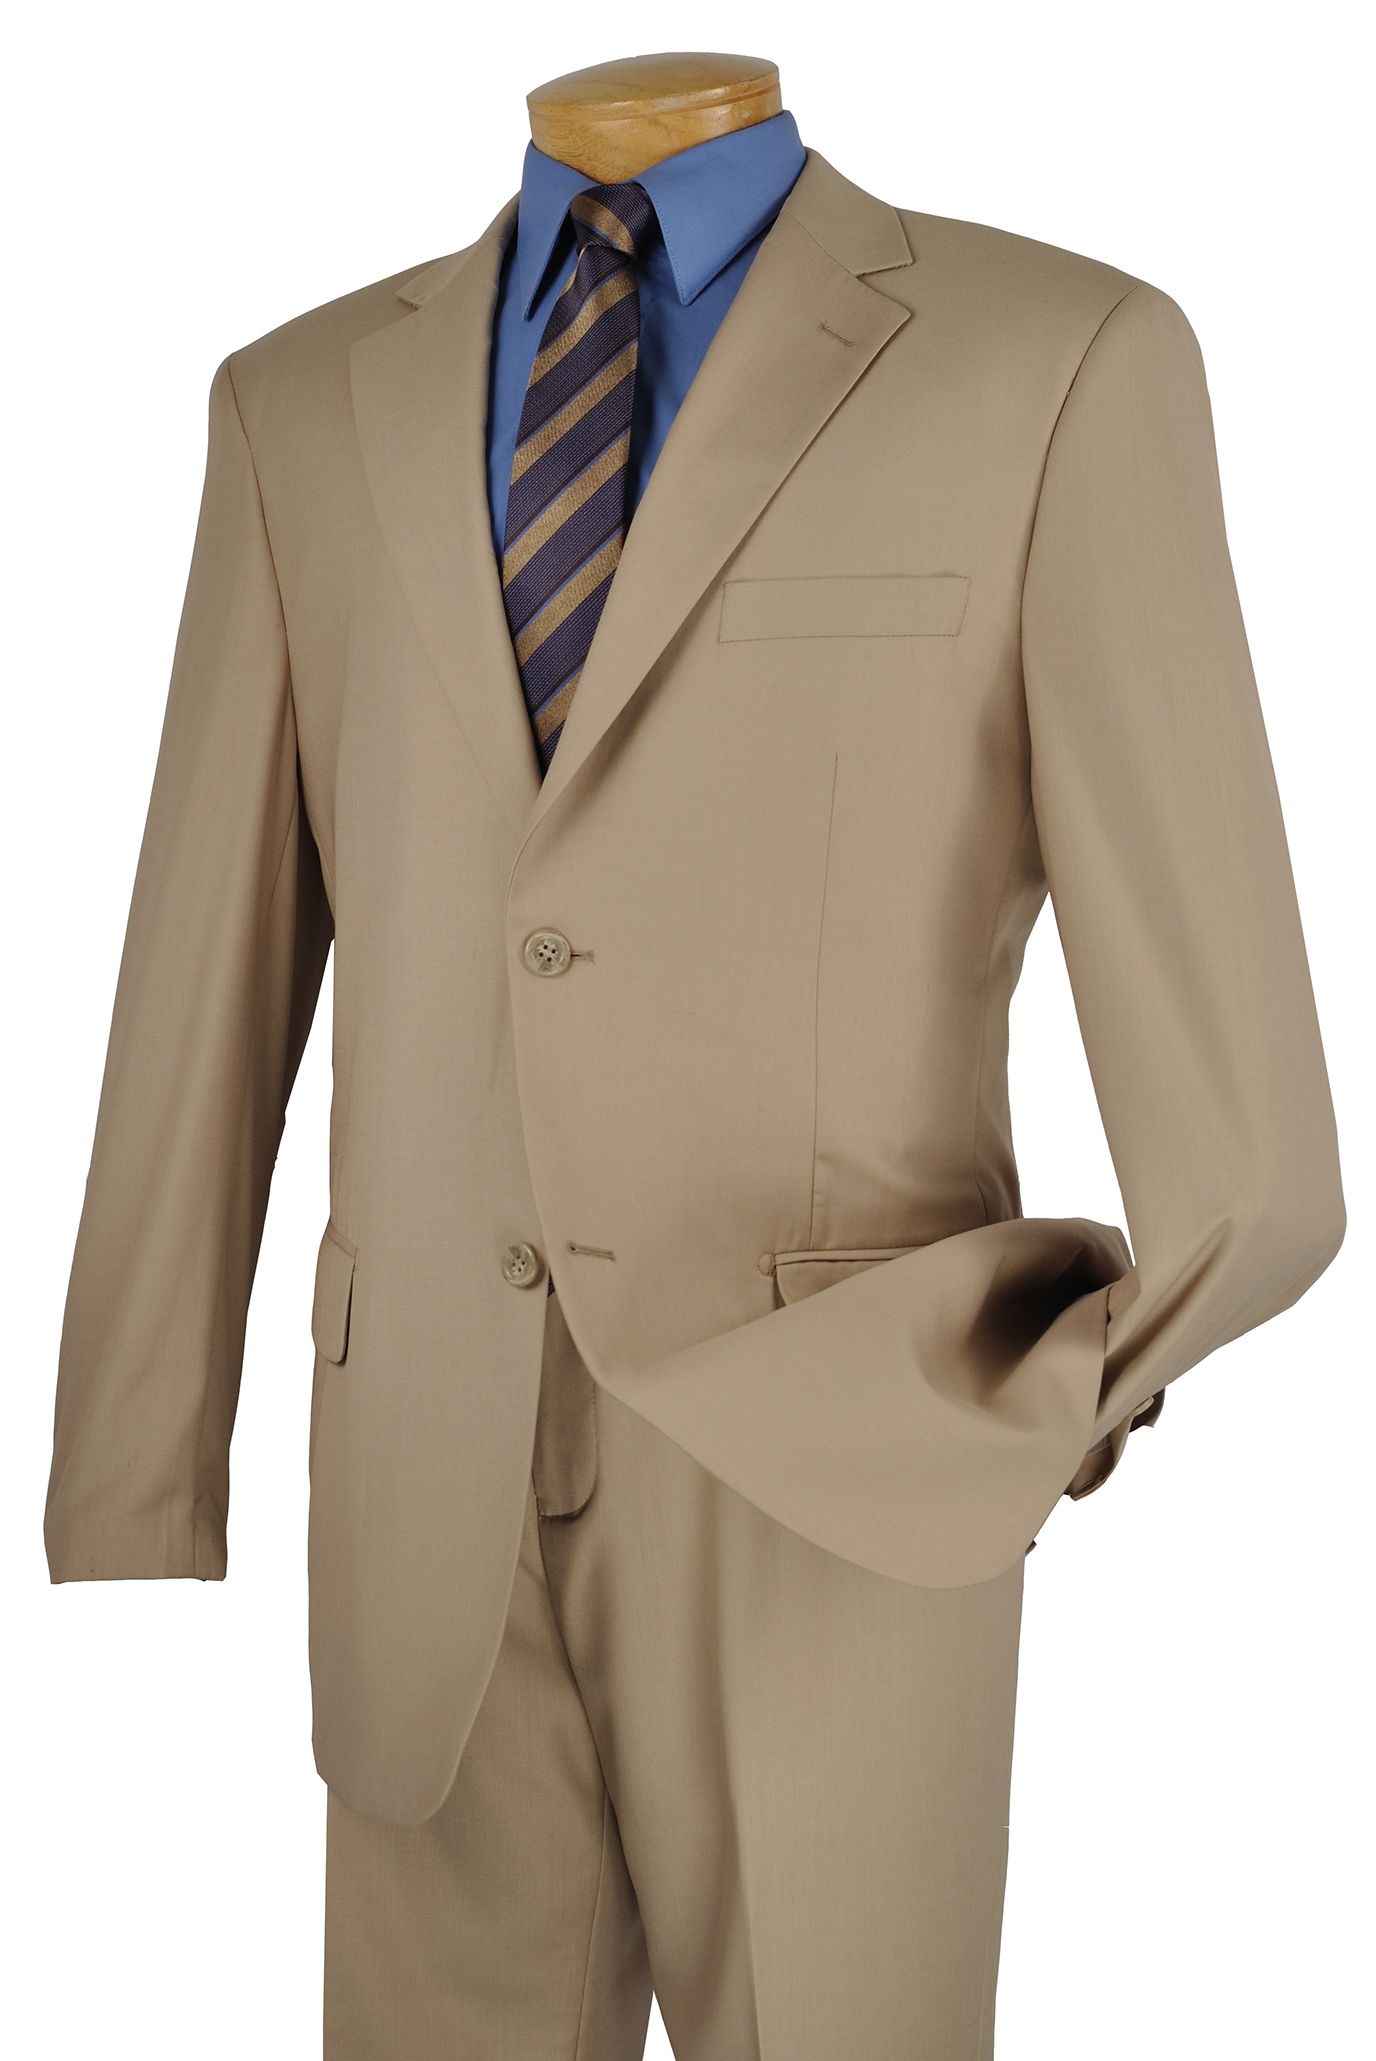 Vinci Men's Wool-Feel Executive Suit | 2-Piece Solid Color